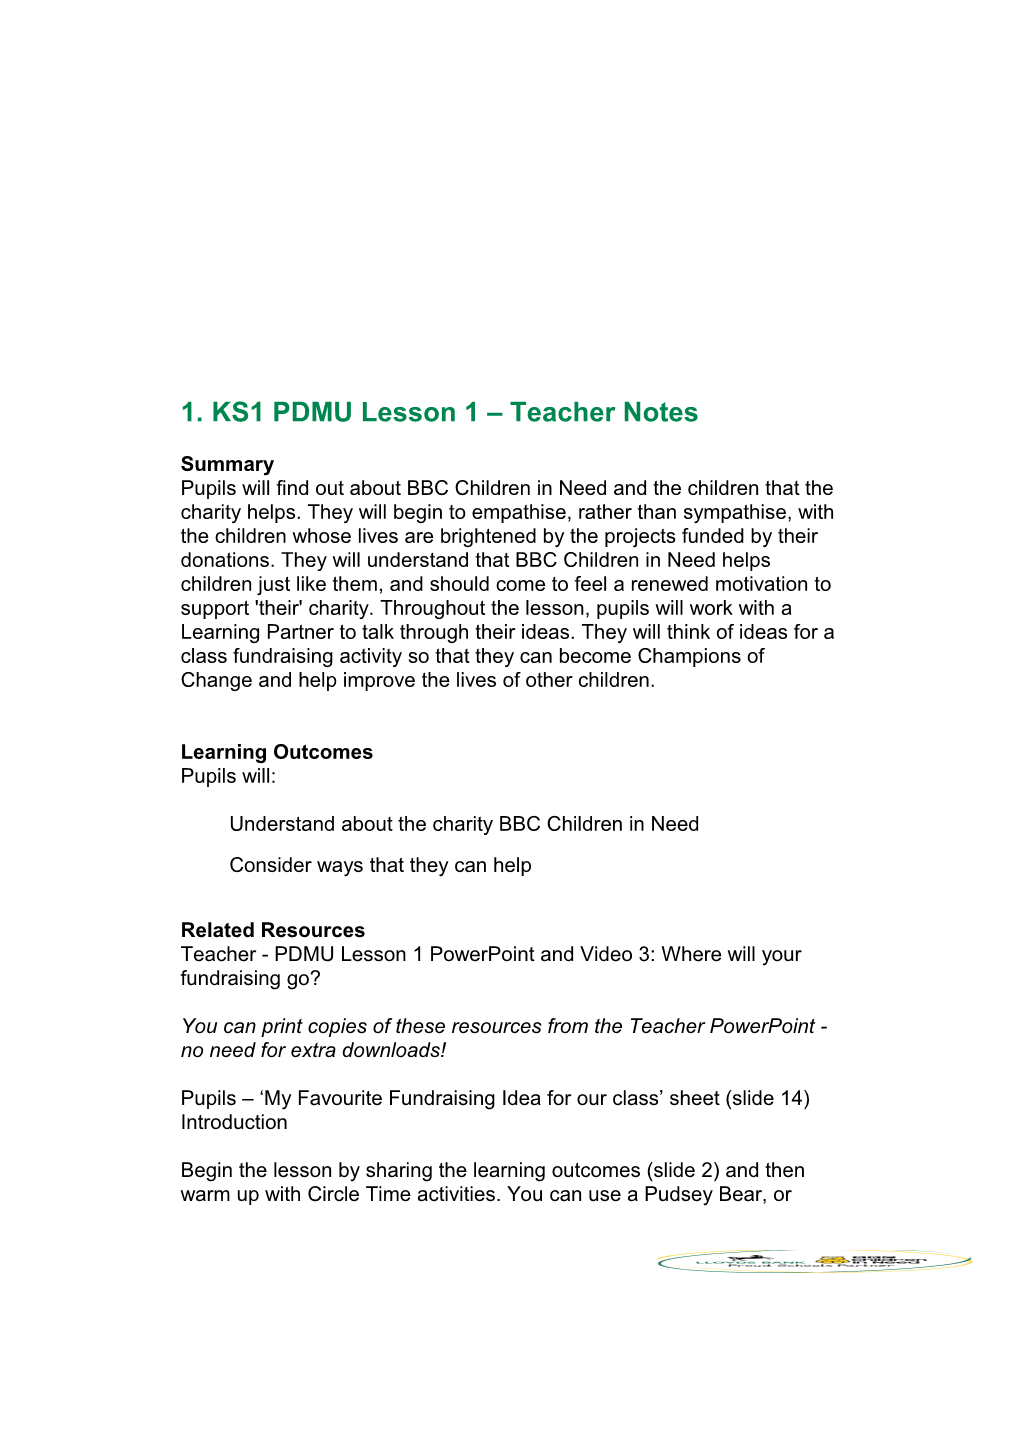 KS1 PDMU Lesson 1 Teacher Notes